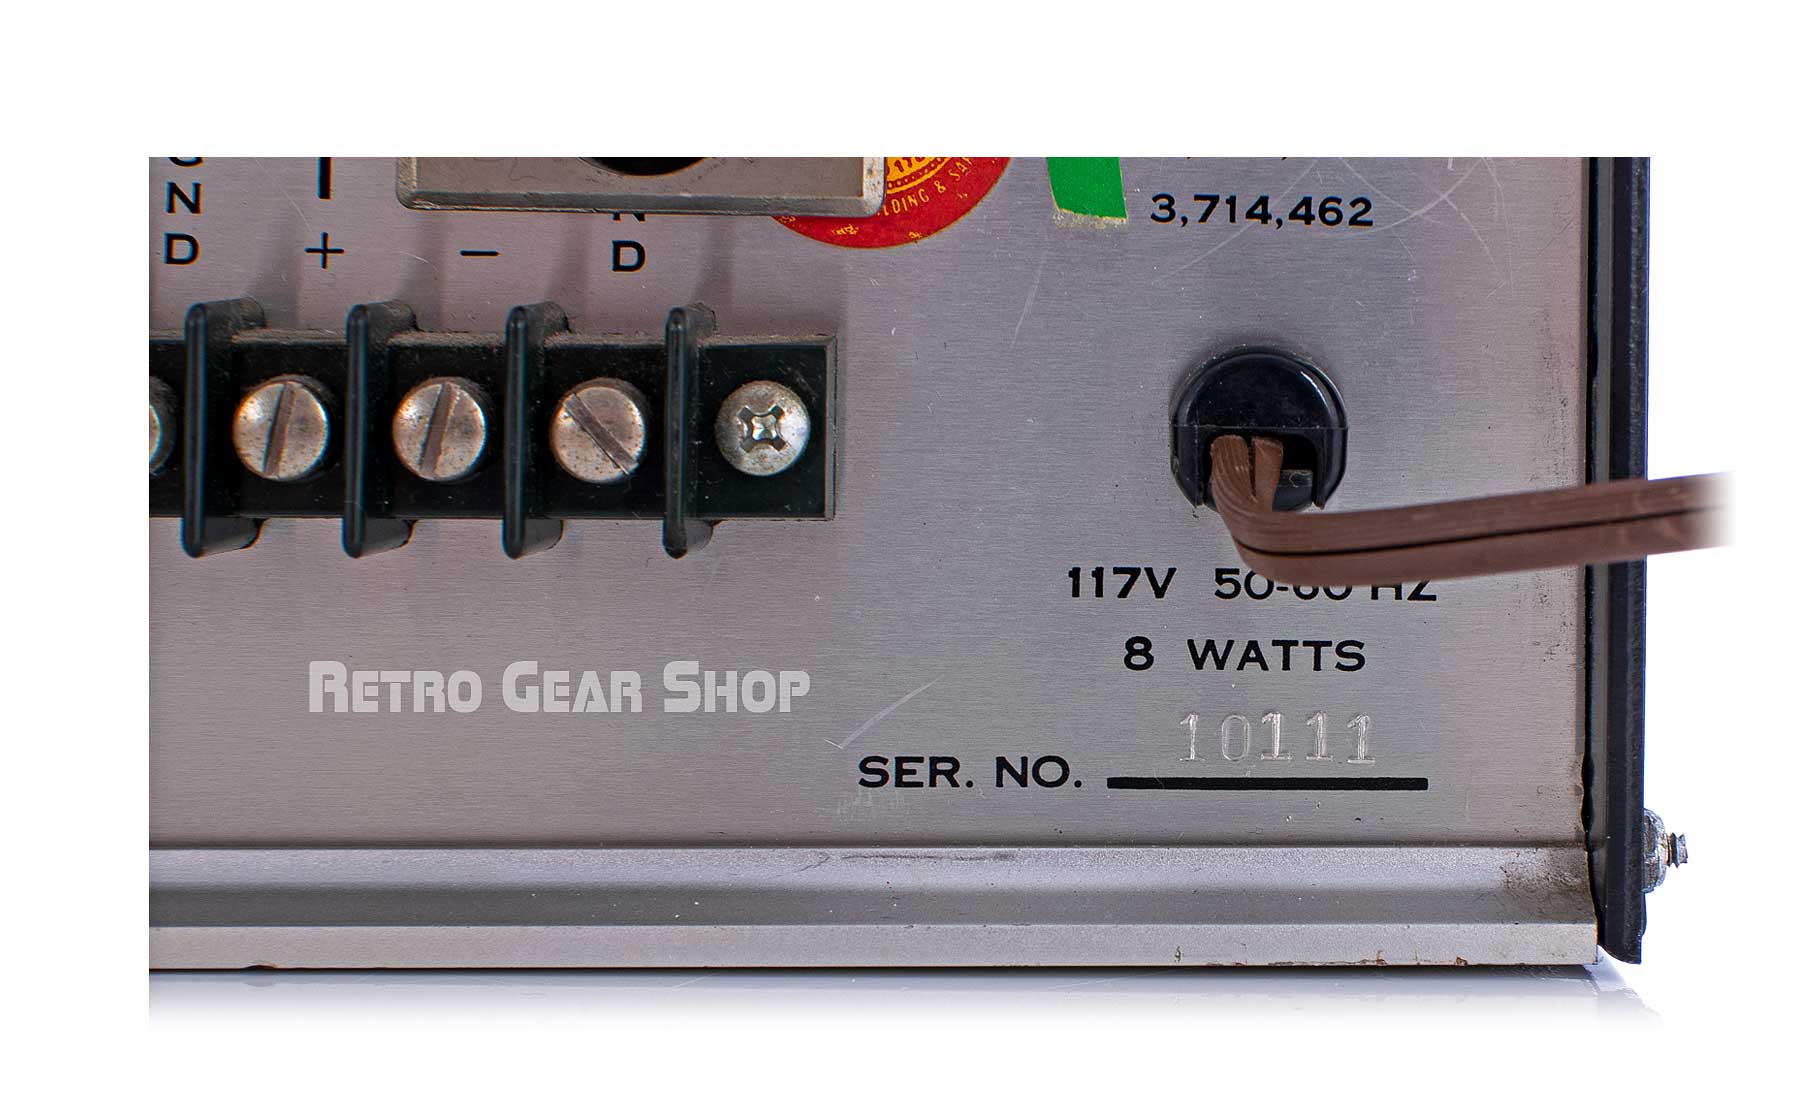 dbx 160VU Stereo Pair Serial Number